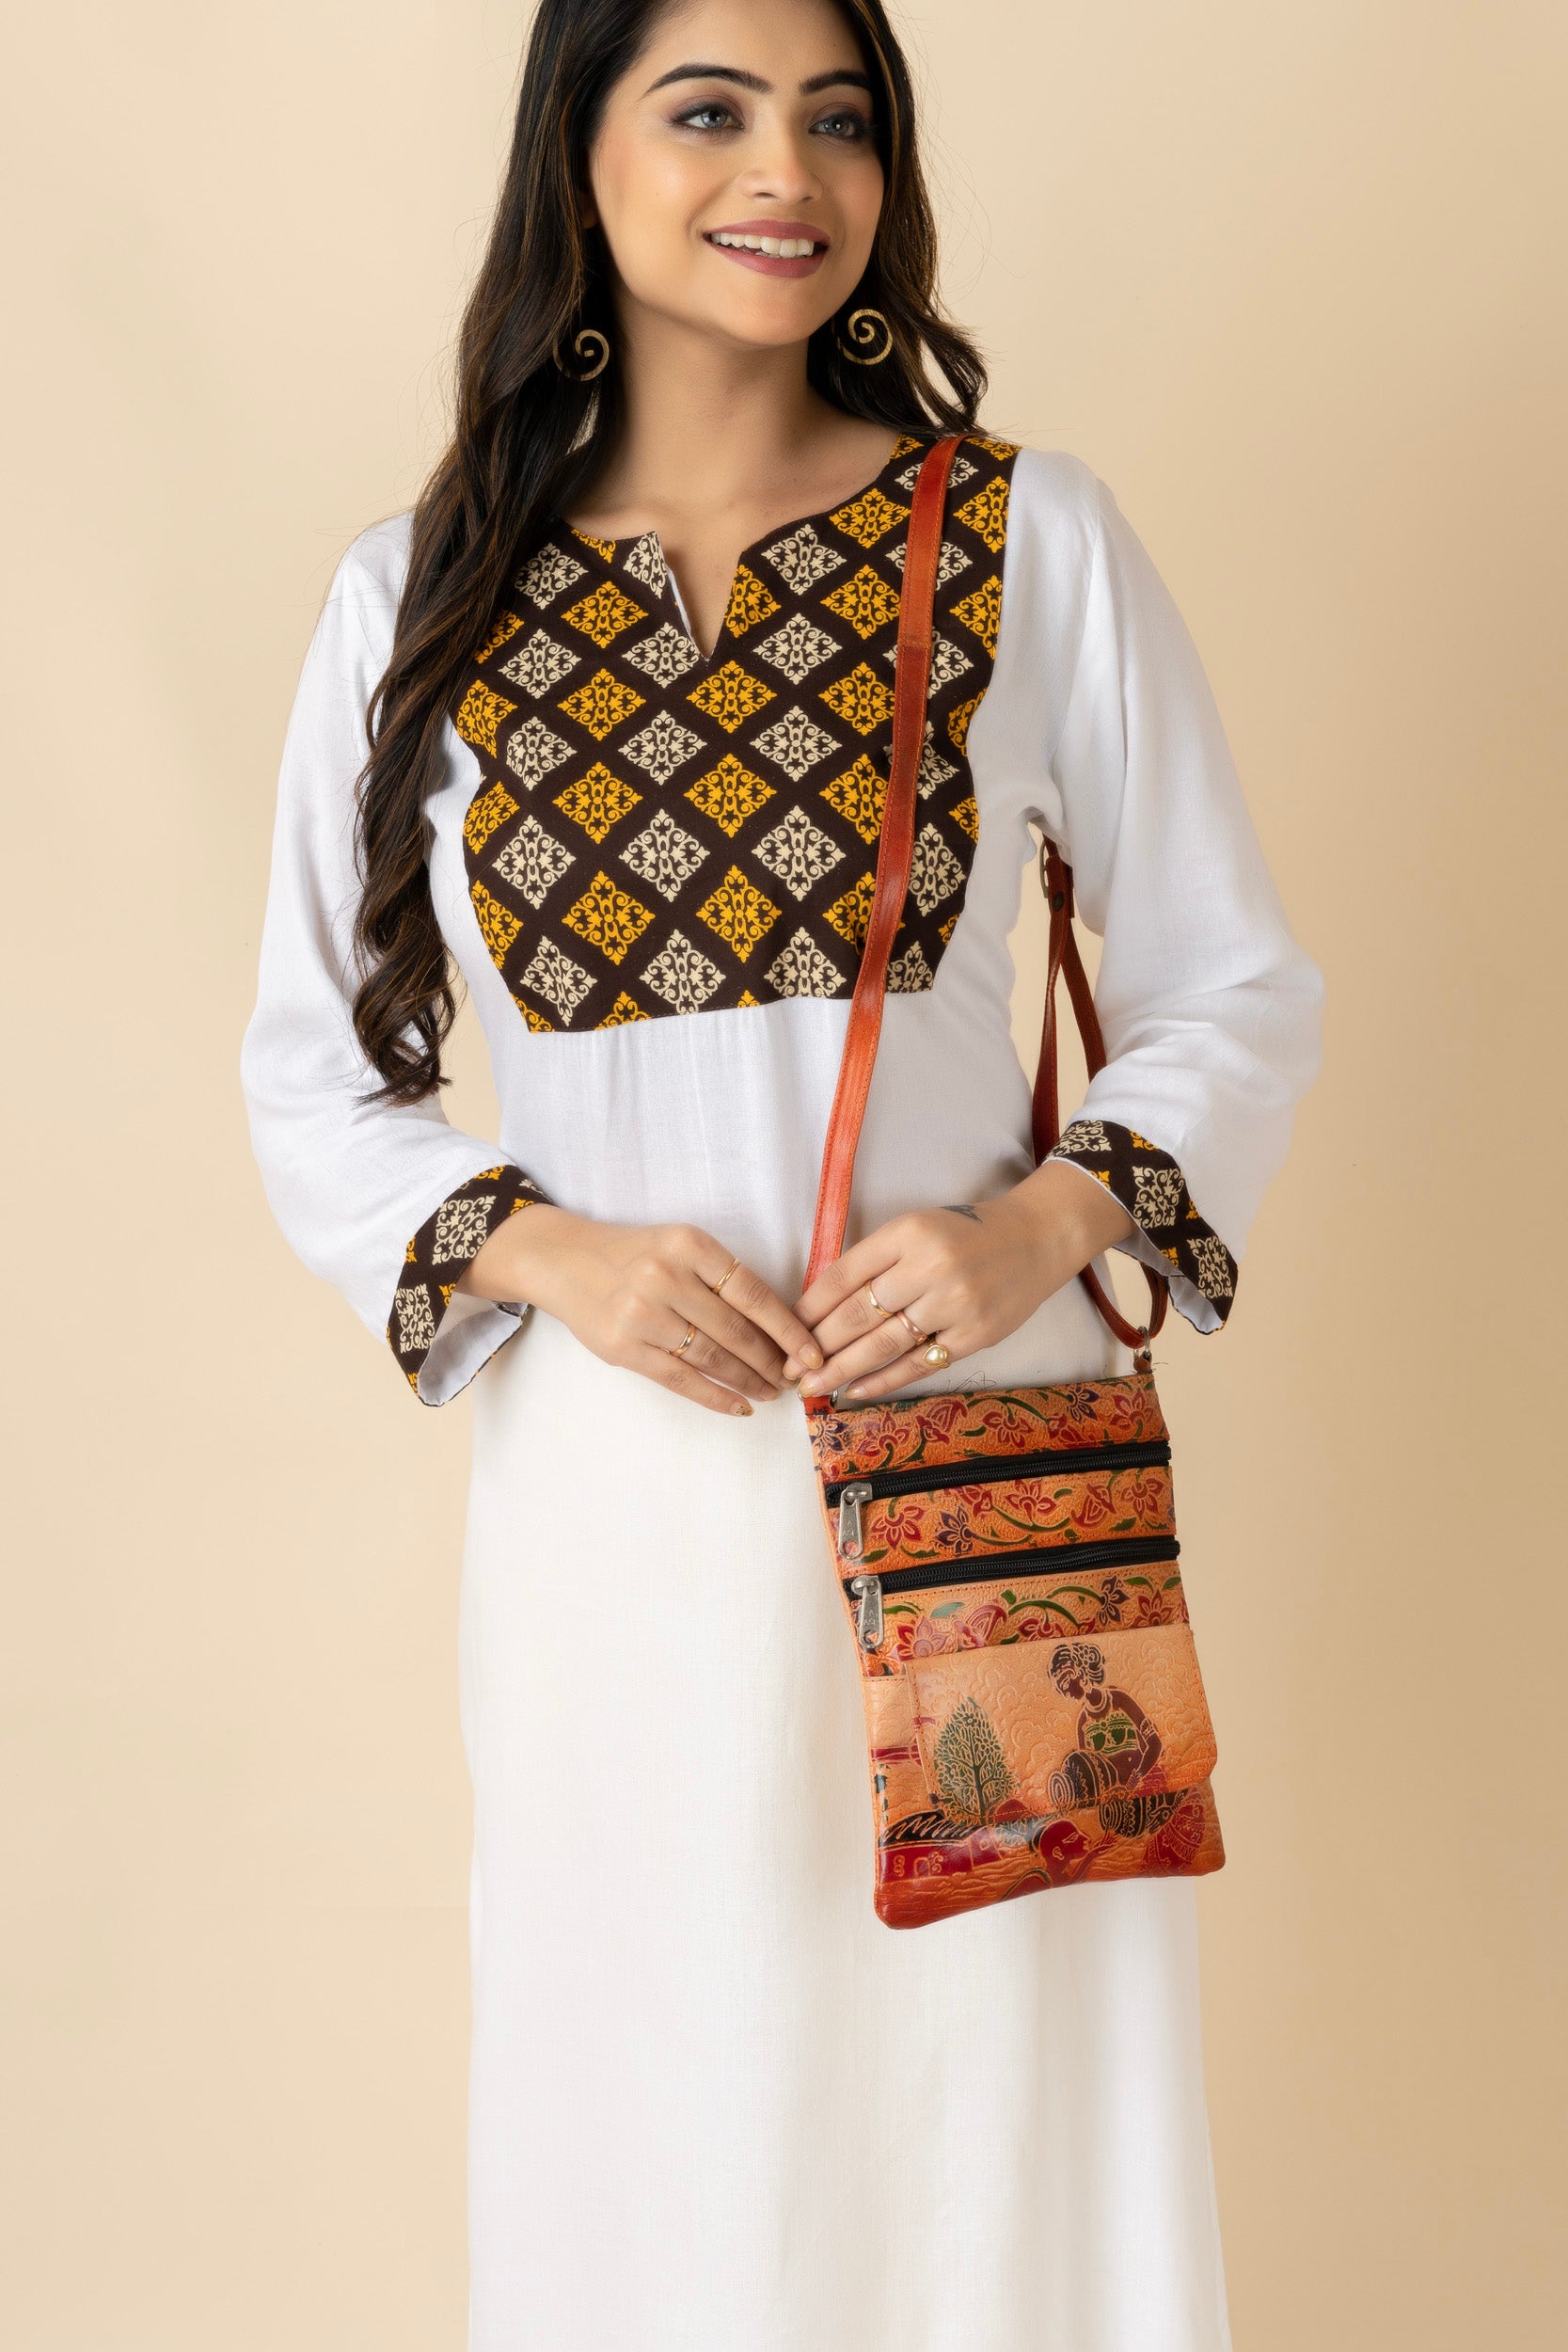 shantiniketan-leather-traditional-printed-women-brown-cross-body-sling-messenger-bag-9-7-mb08